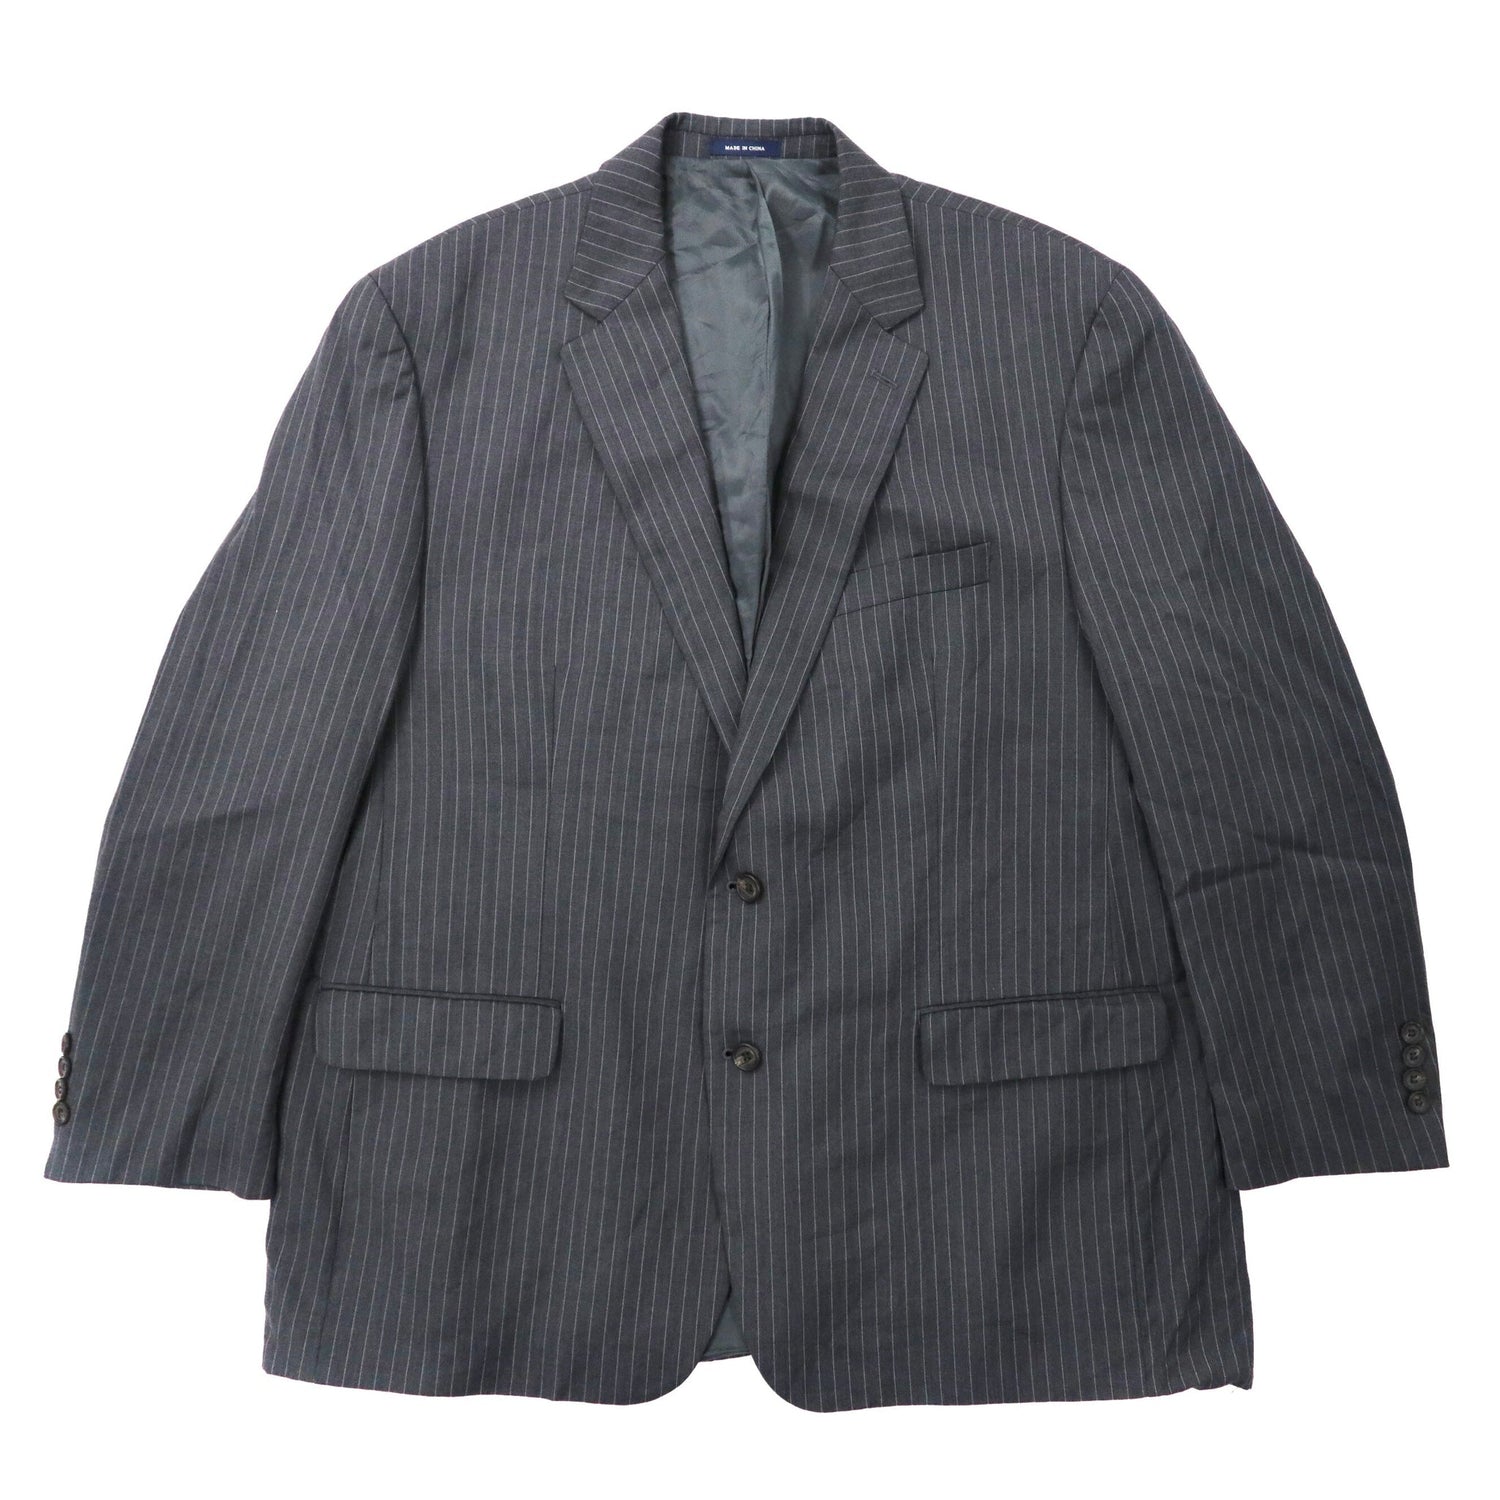 RALPH LAUREN 2B Tailored Jacket 48 Gray Striped Wool DILLARD's ...